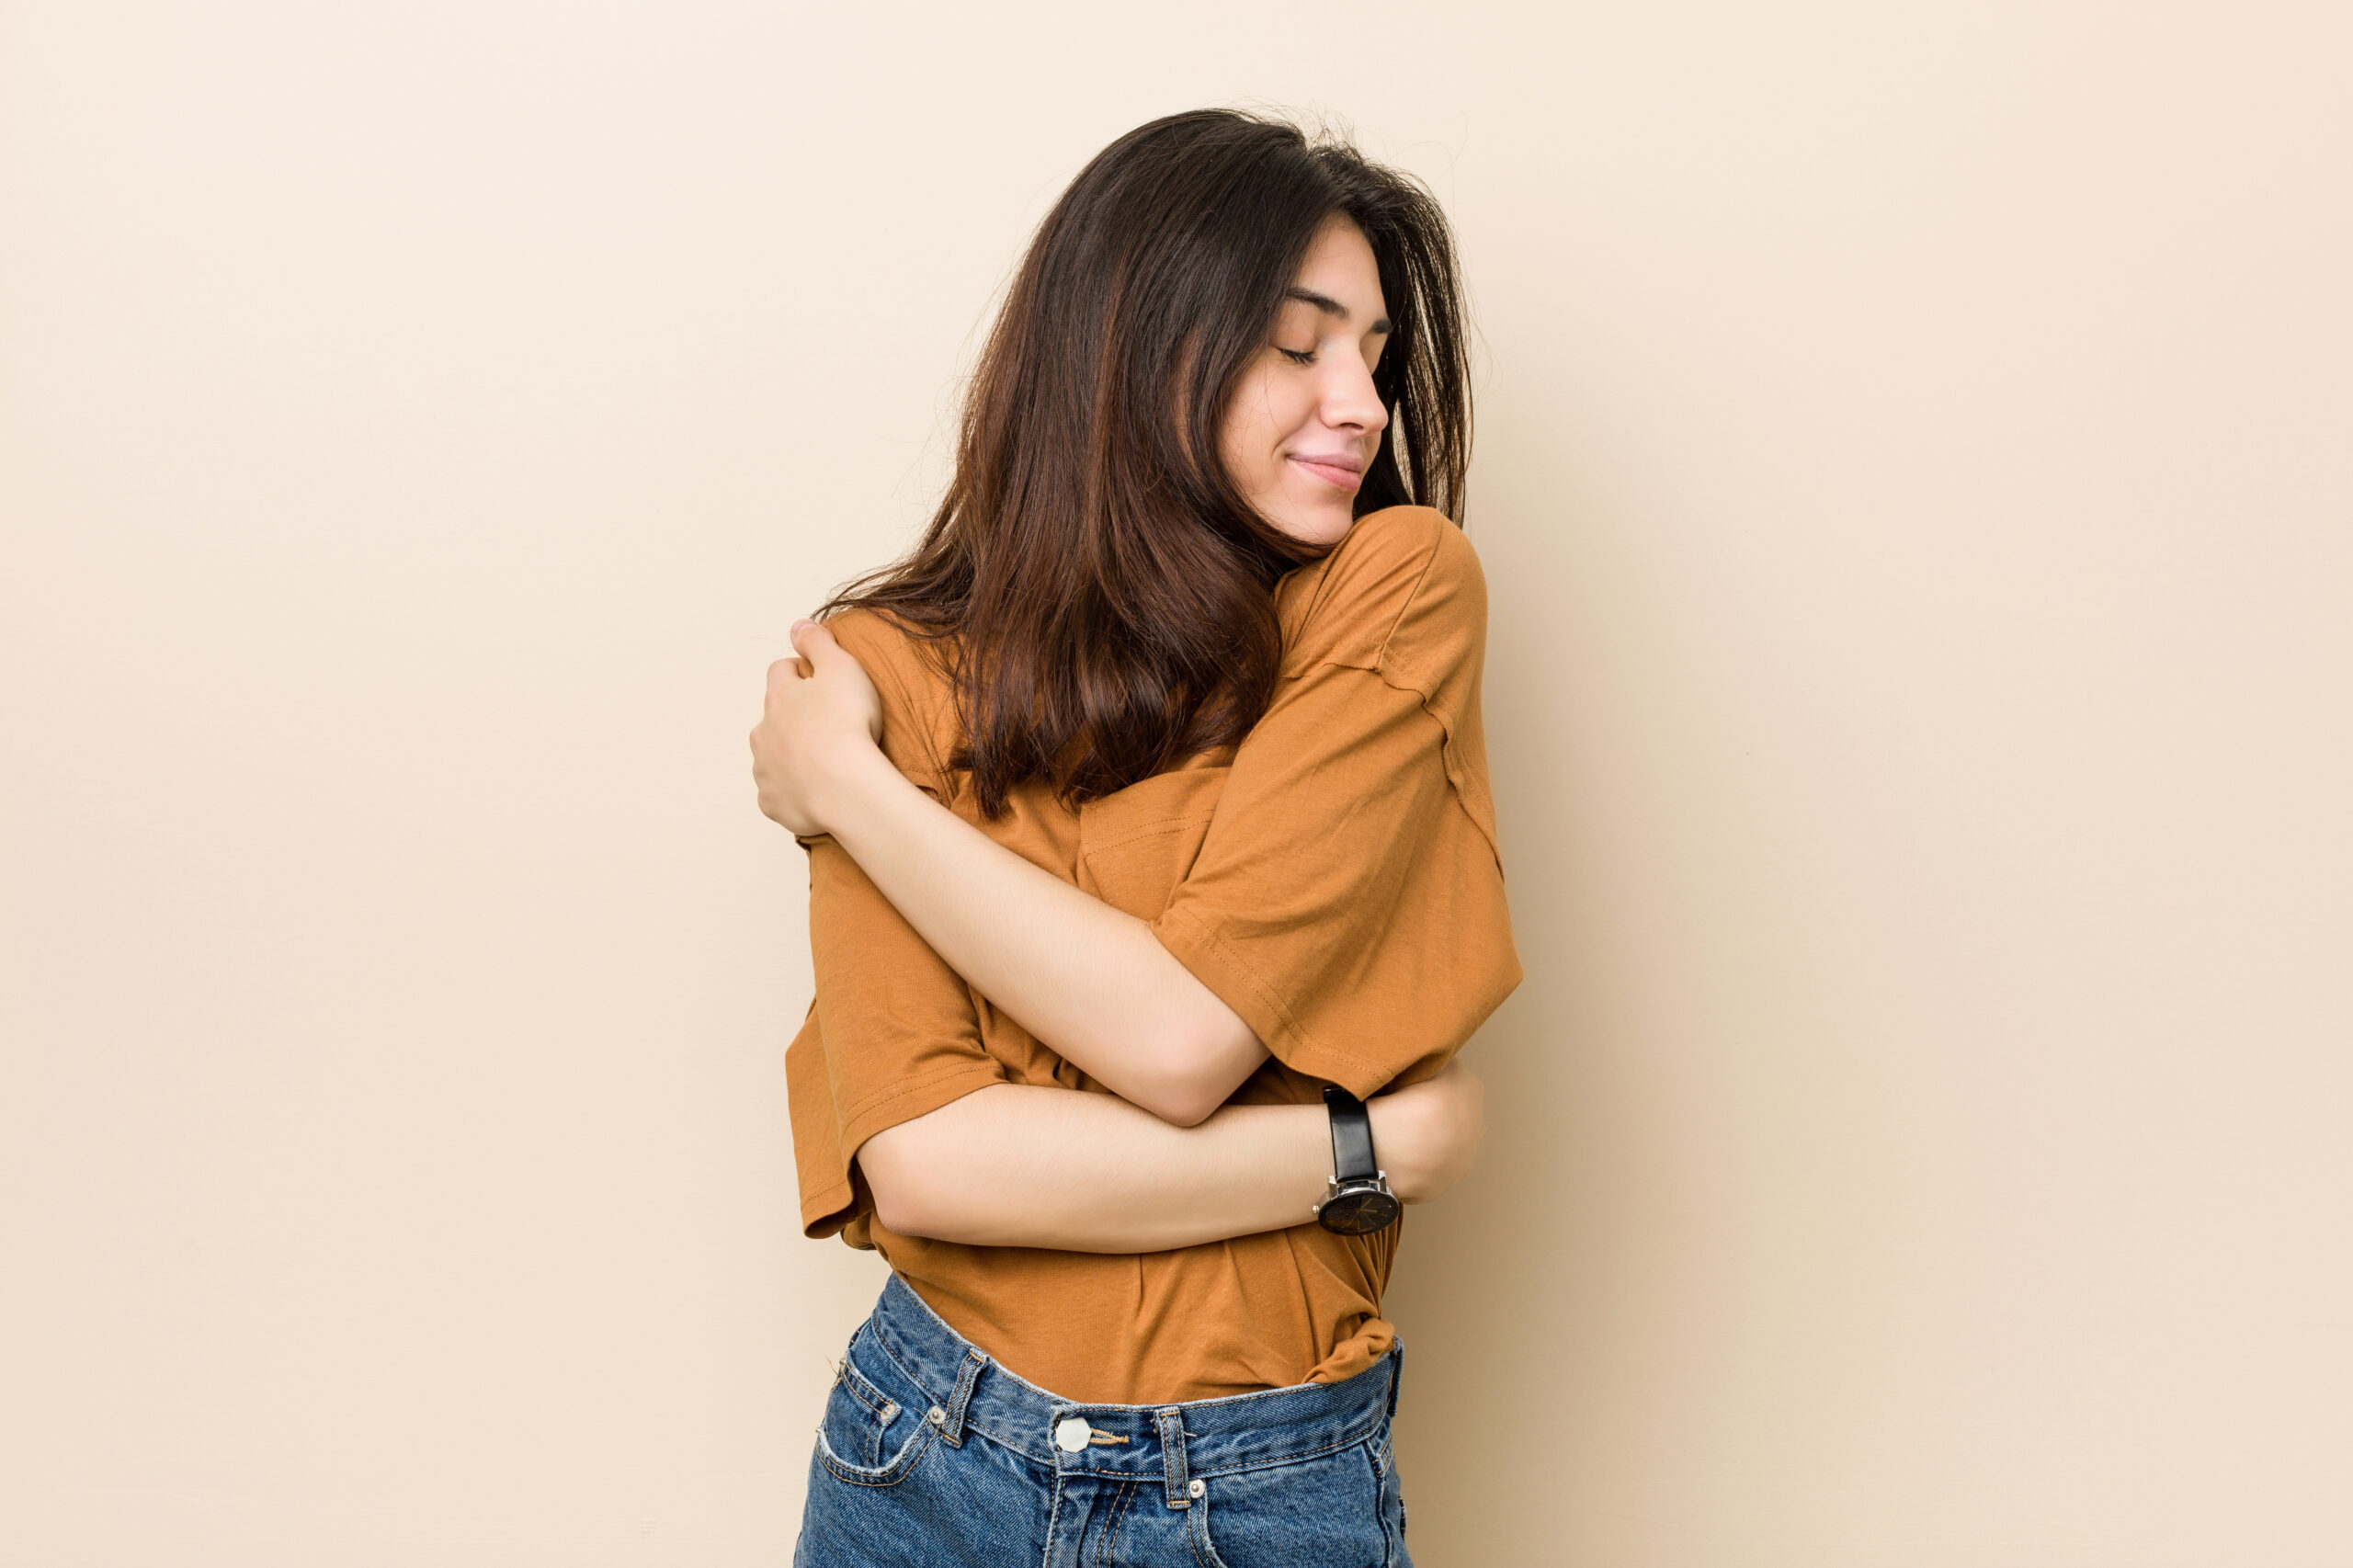 Woman hugging herself practicing self-care